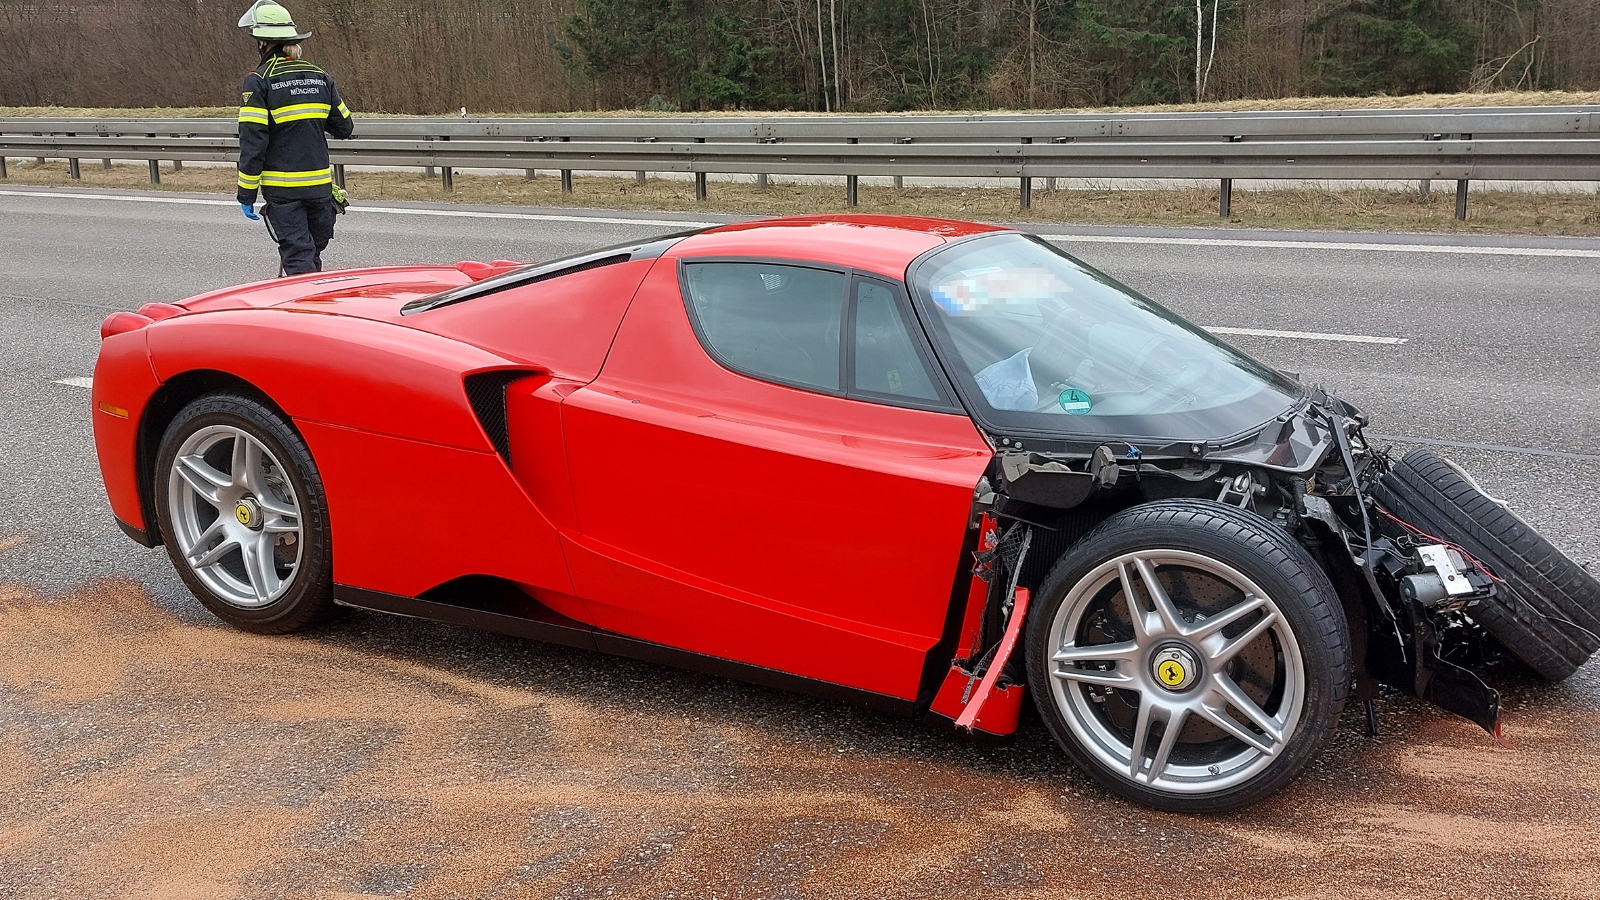 crashed Ferrari Enzo on Autobahn in Germany